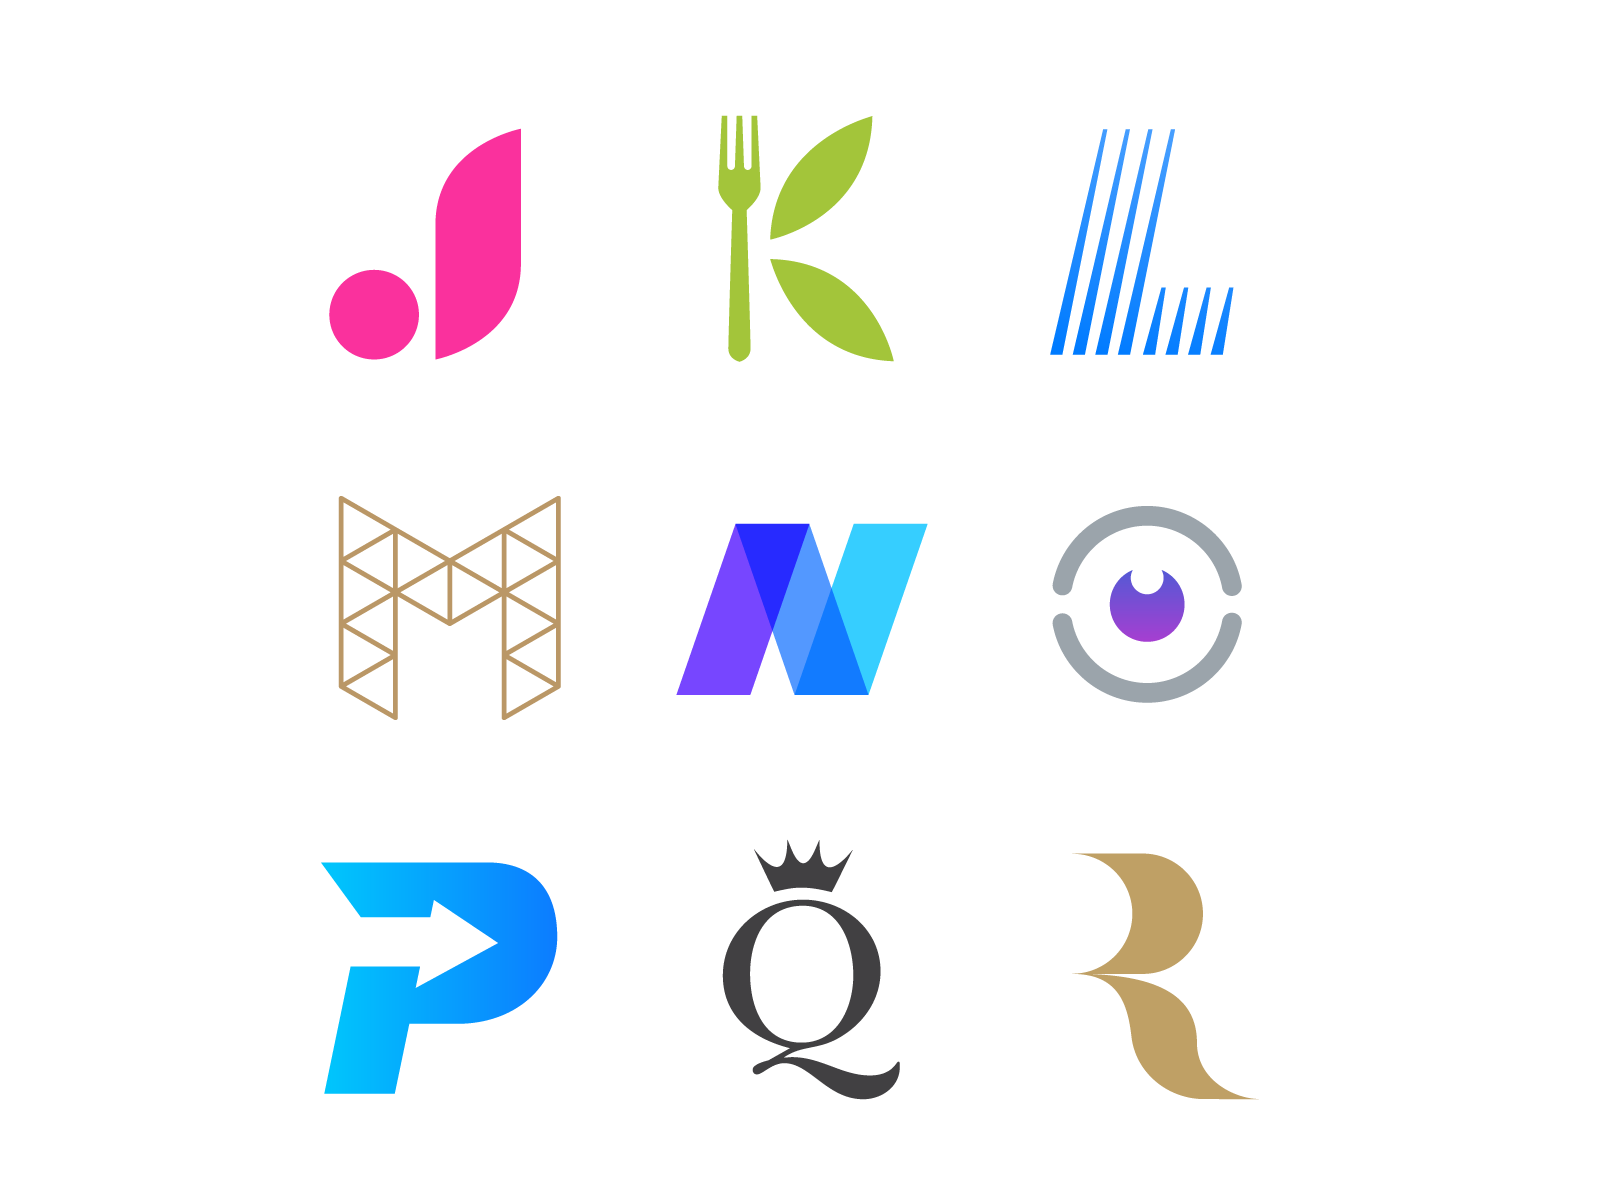 alphabet-logos-summary-2-of-3-by-jacob-cass-on-dribbble